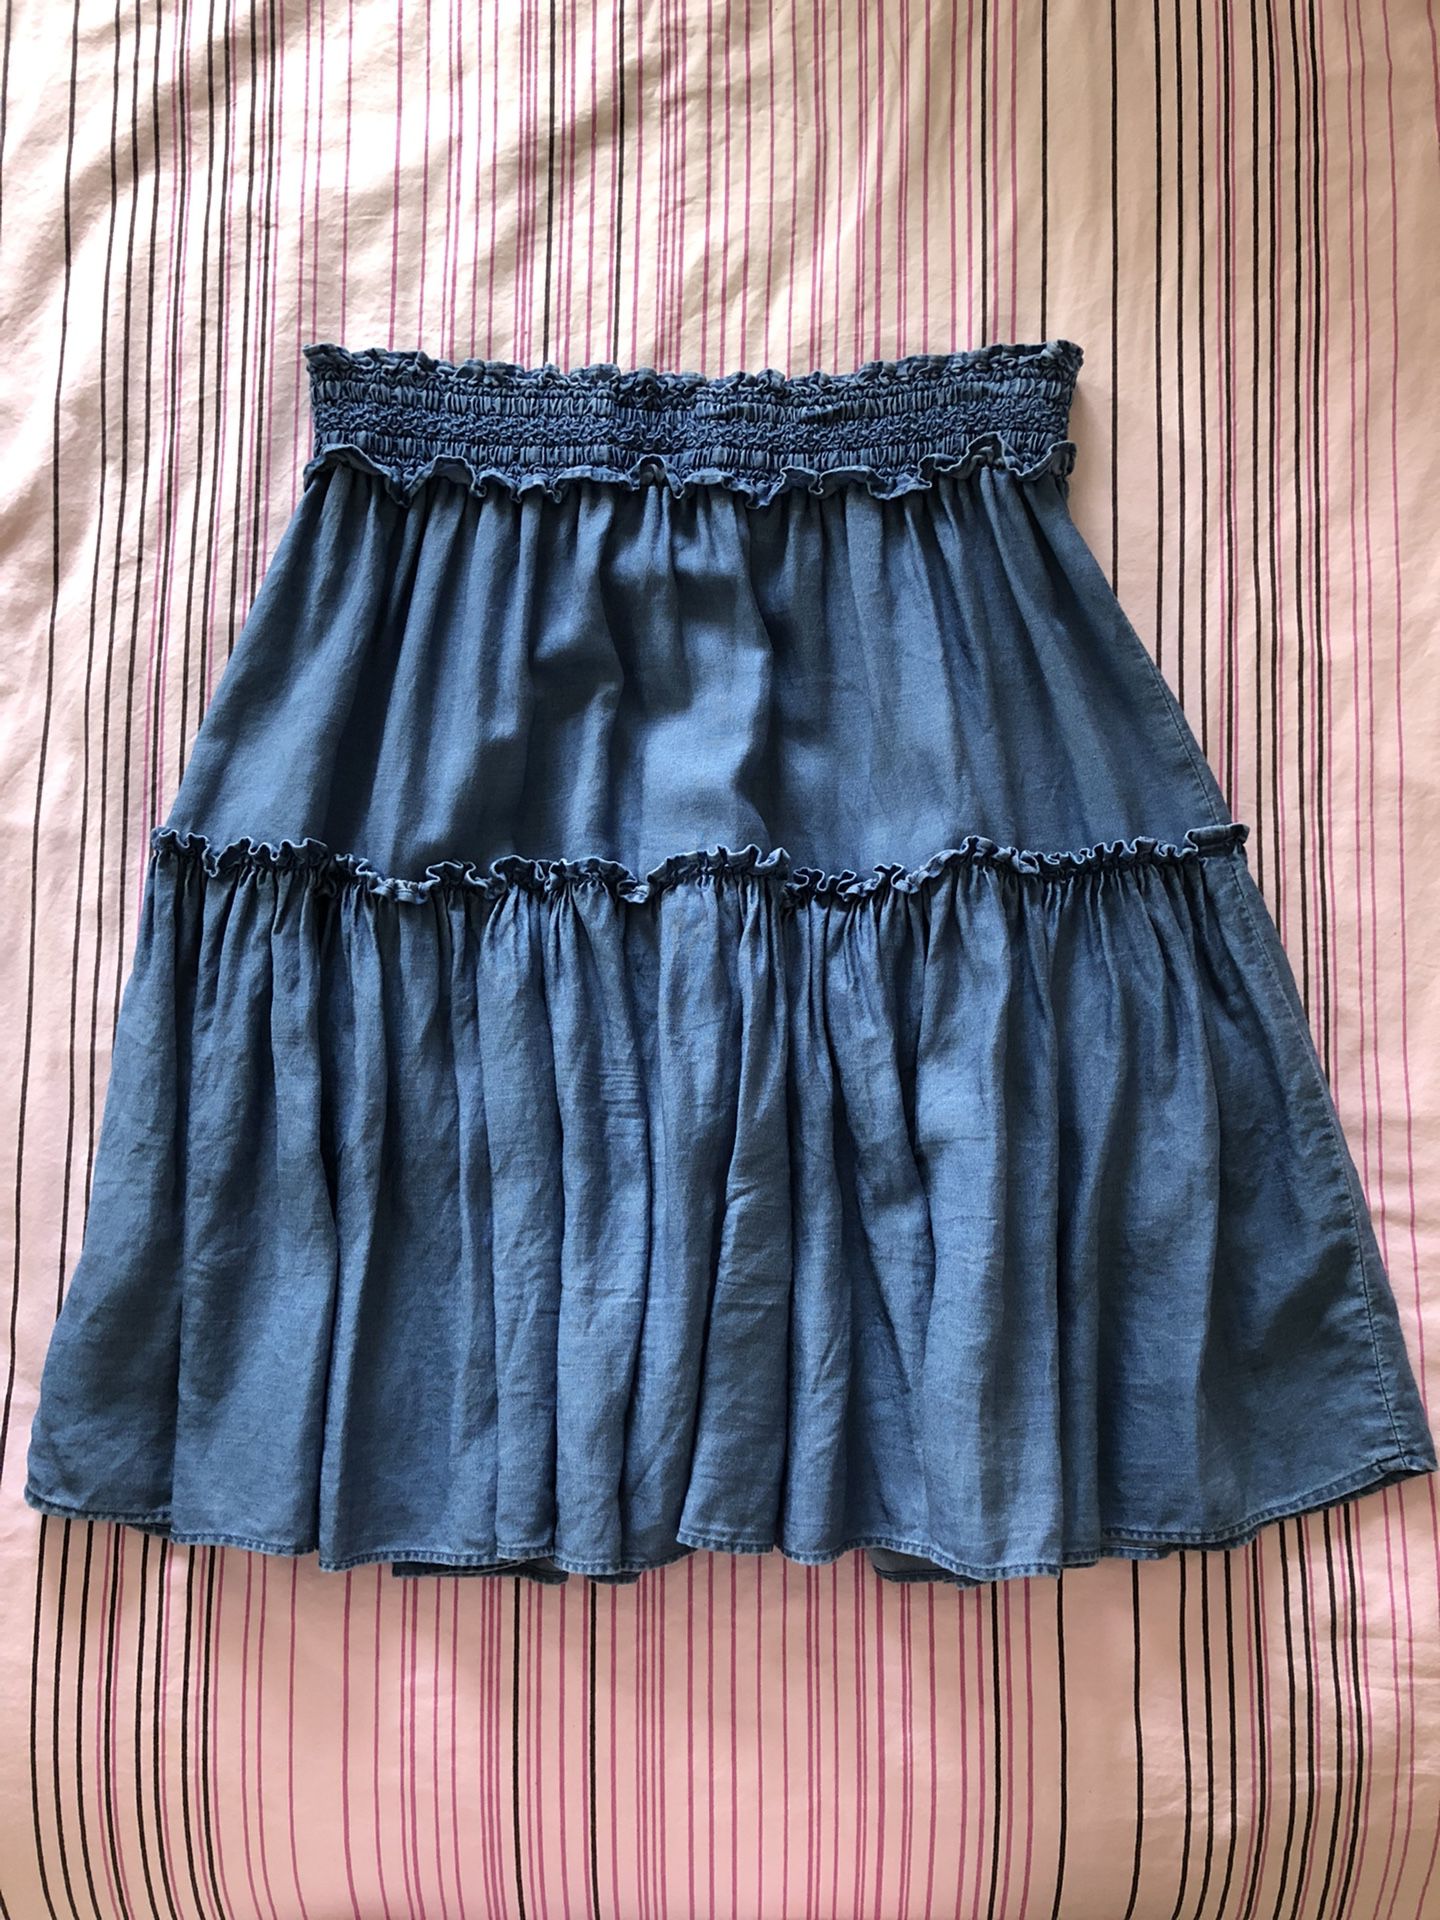 Kate Spade Mini Skirt